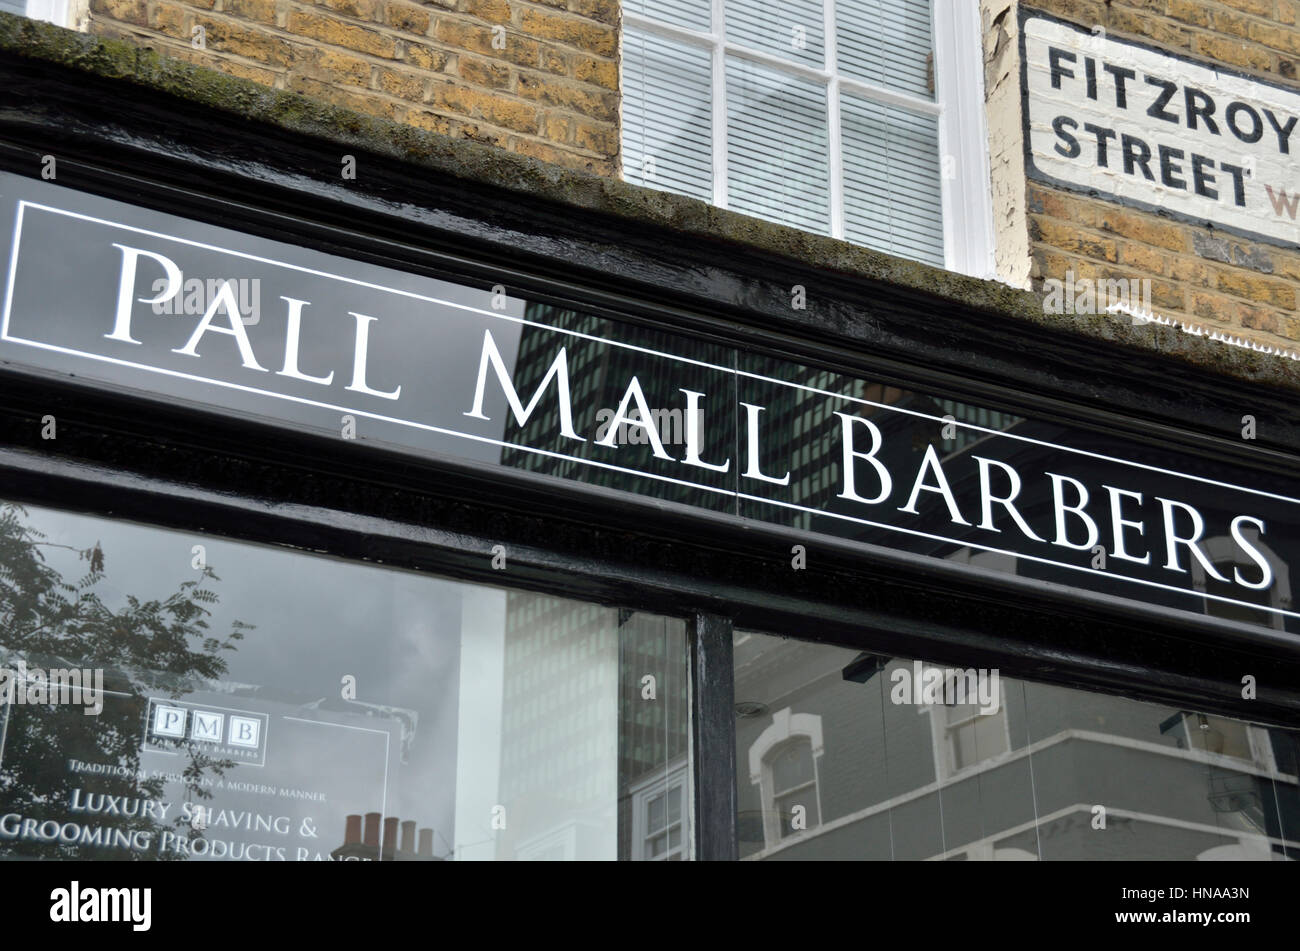 Pall Mall Barbers in Fitzrovia Street, London, UK. Stock Photo